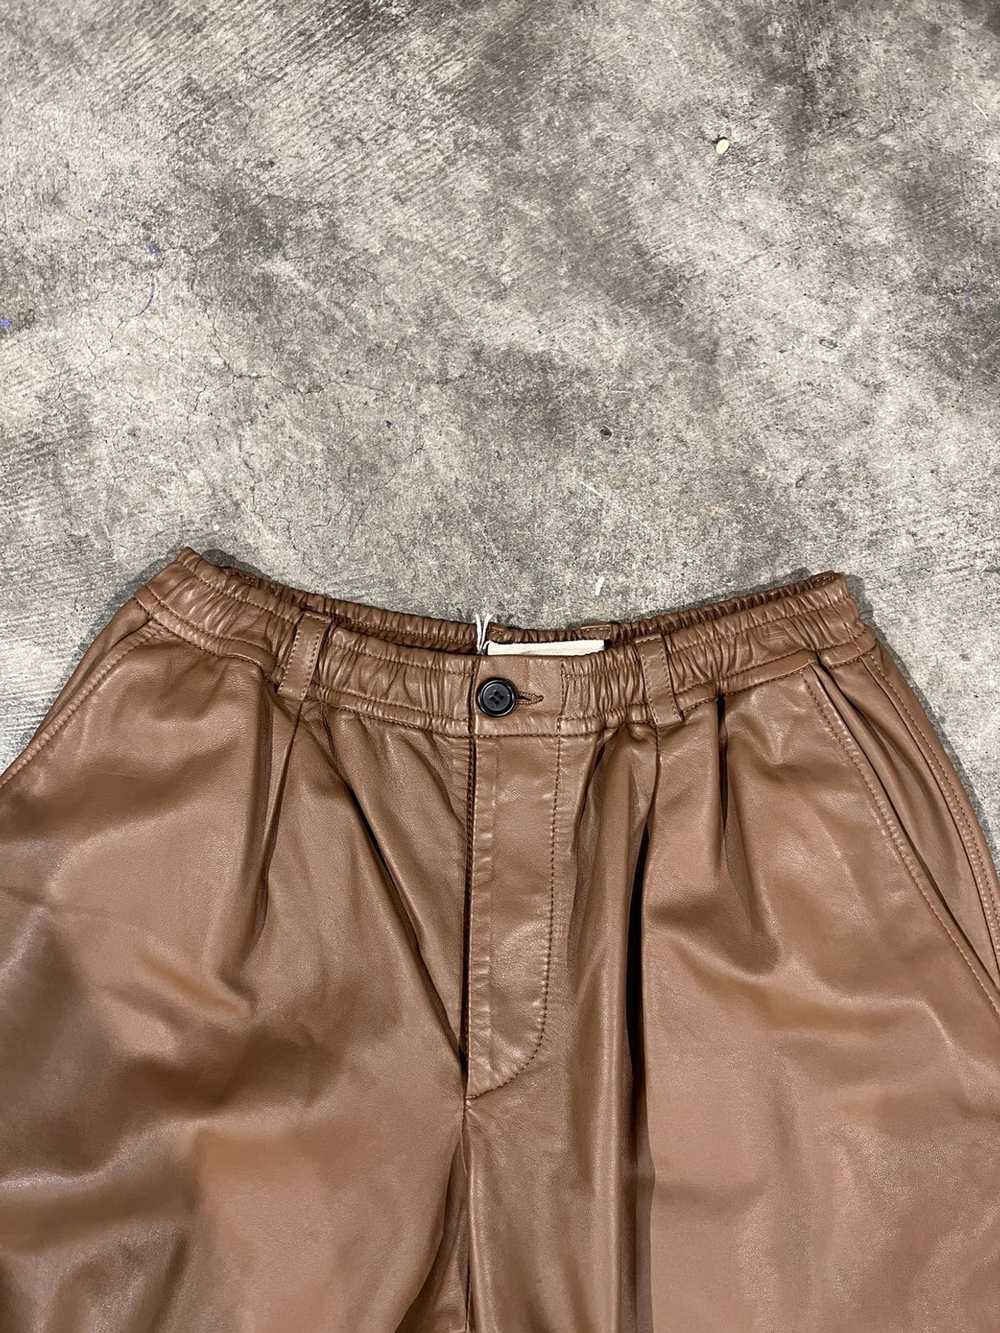 Marni Marni Leather Shorts - image 2